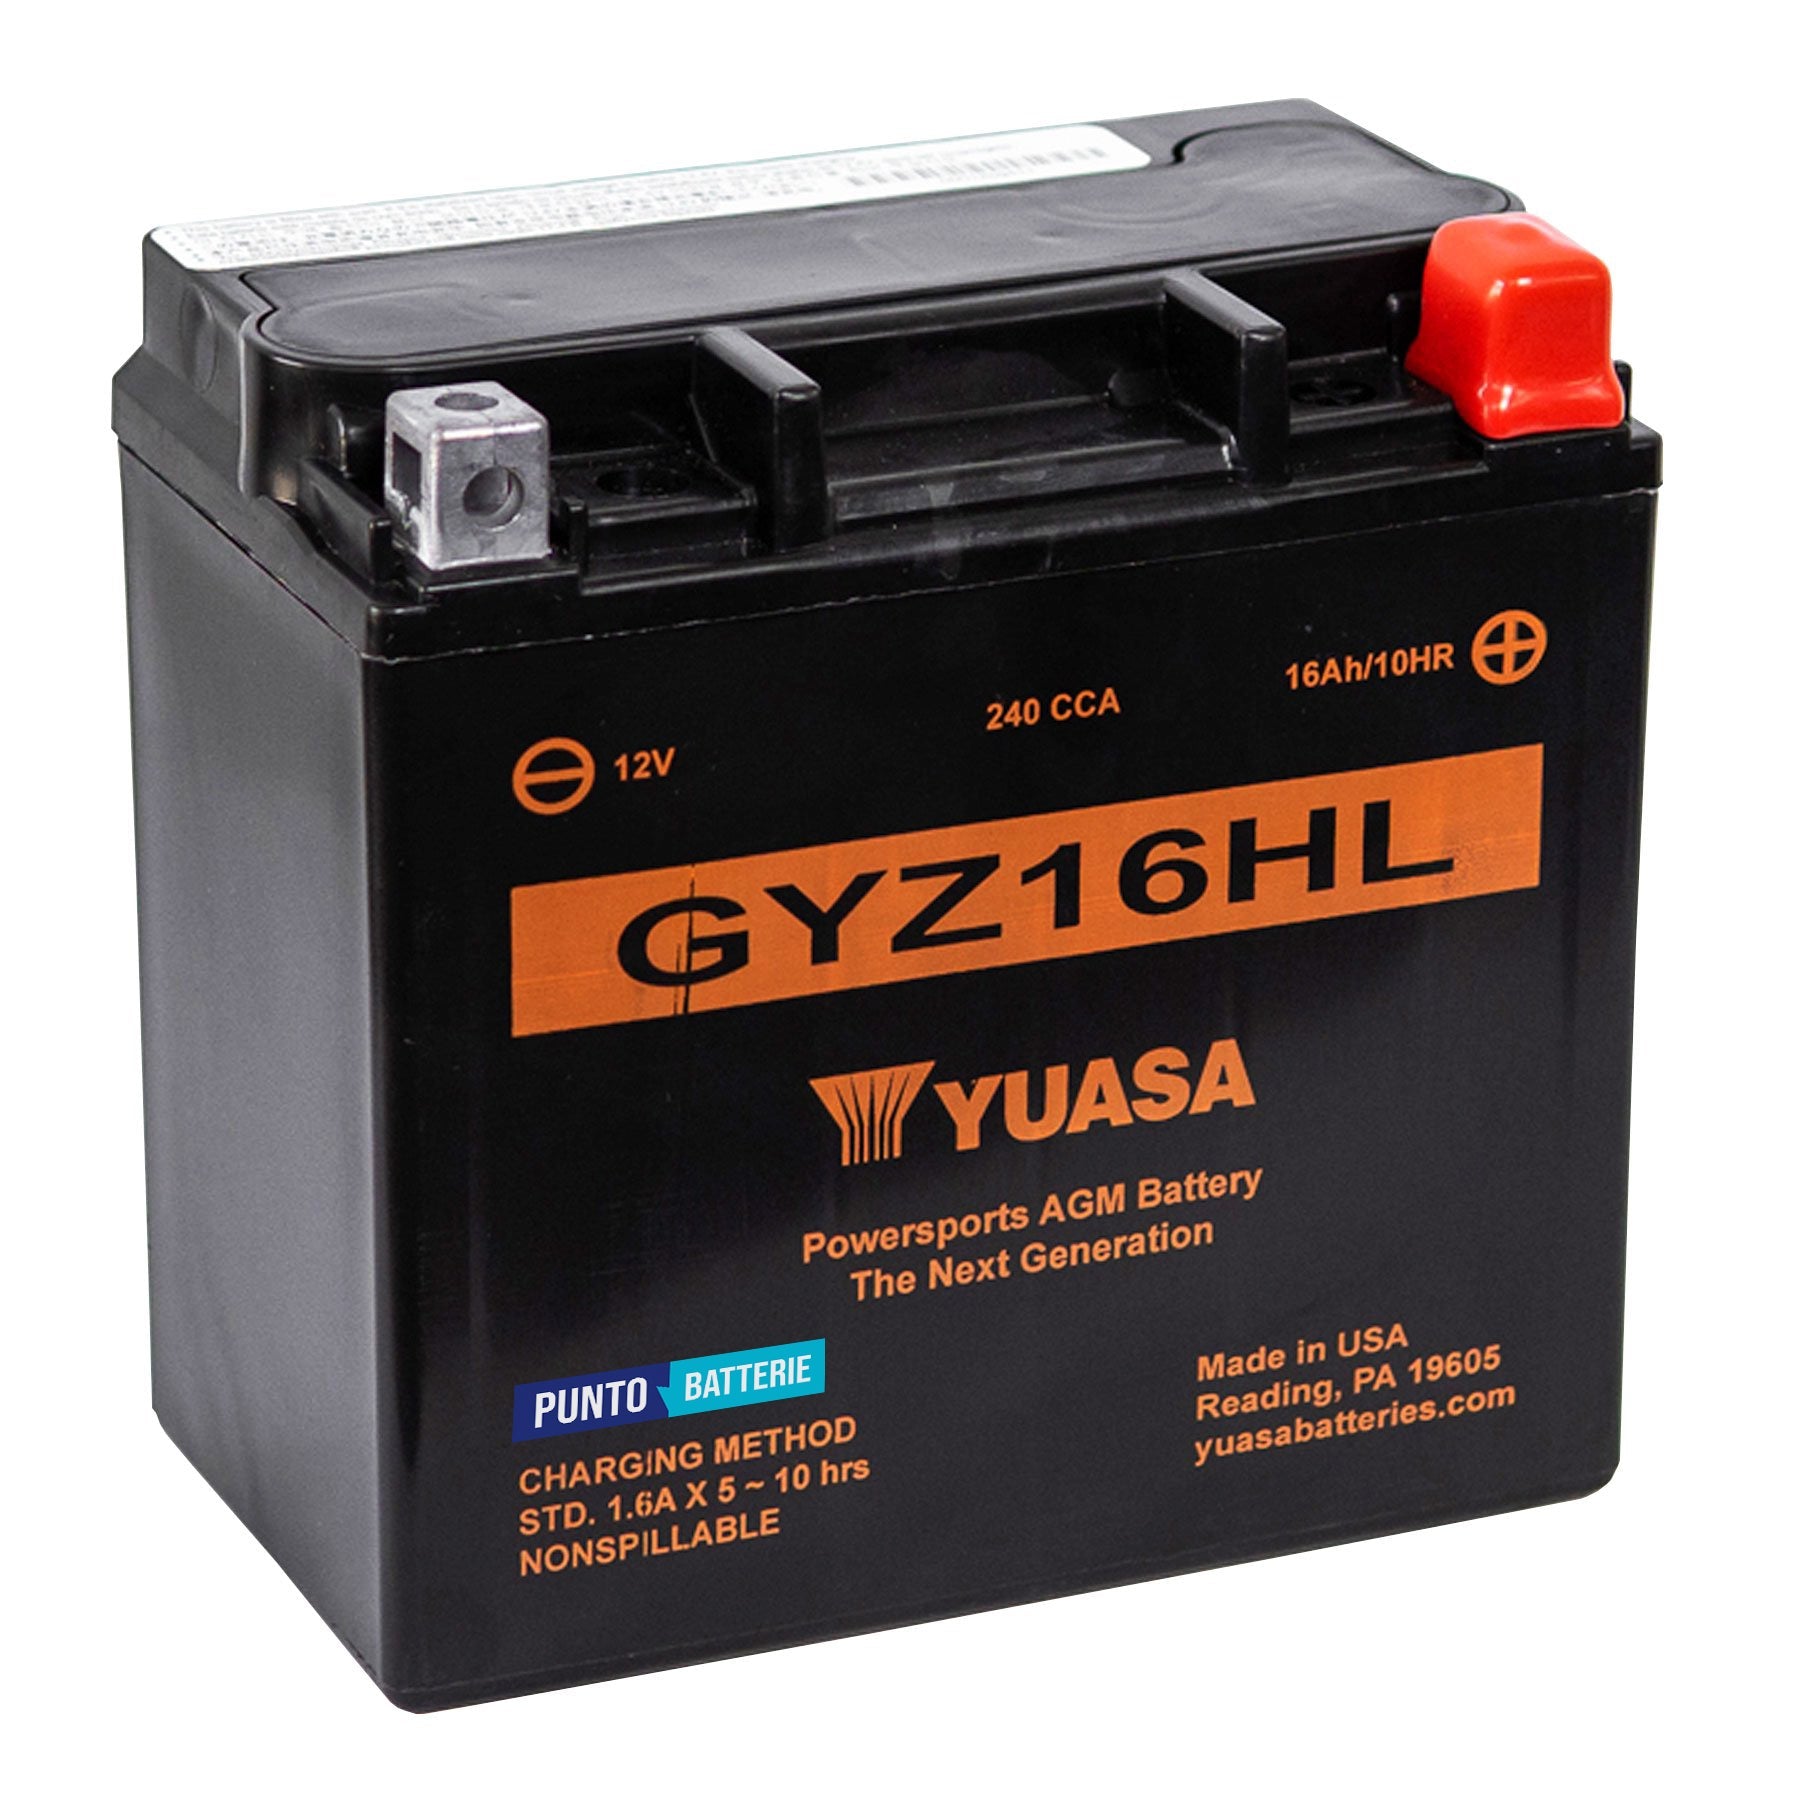 Batteria originale Yuasa GYZ GYZ16HL, dimensioni 150 x 87 x 145, polo positivo a destra, 12 volt, 16 amperora, 240 ampere. Batteria per moto, scooter e powersport.